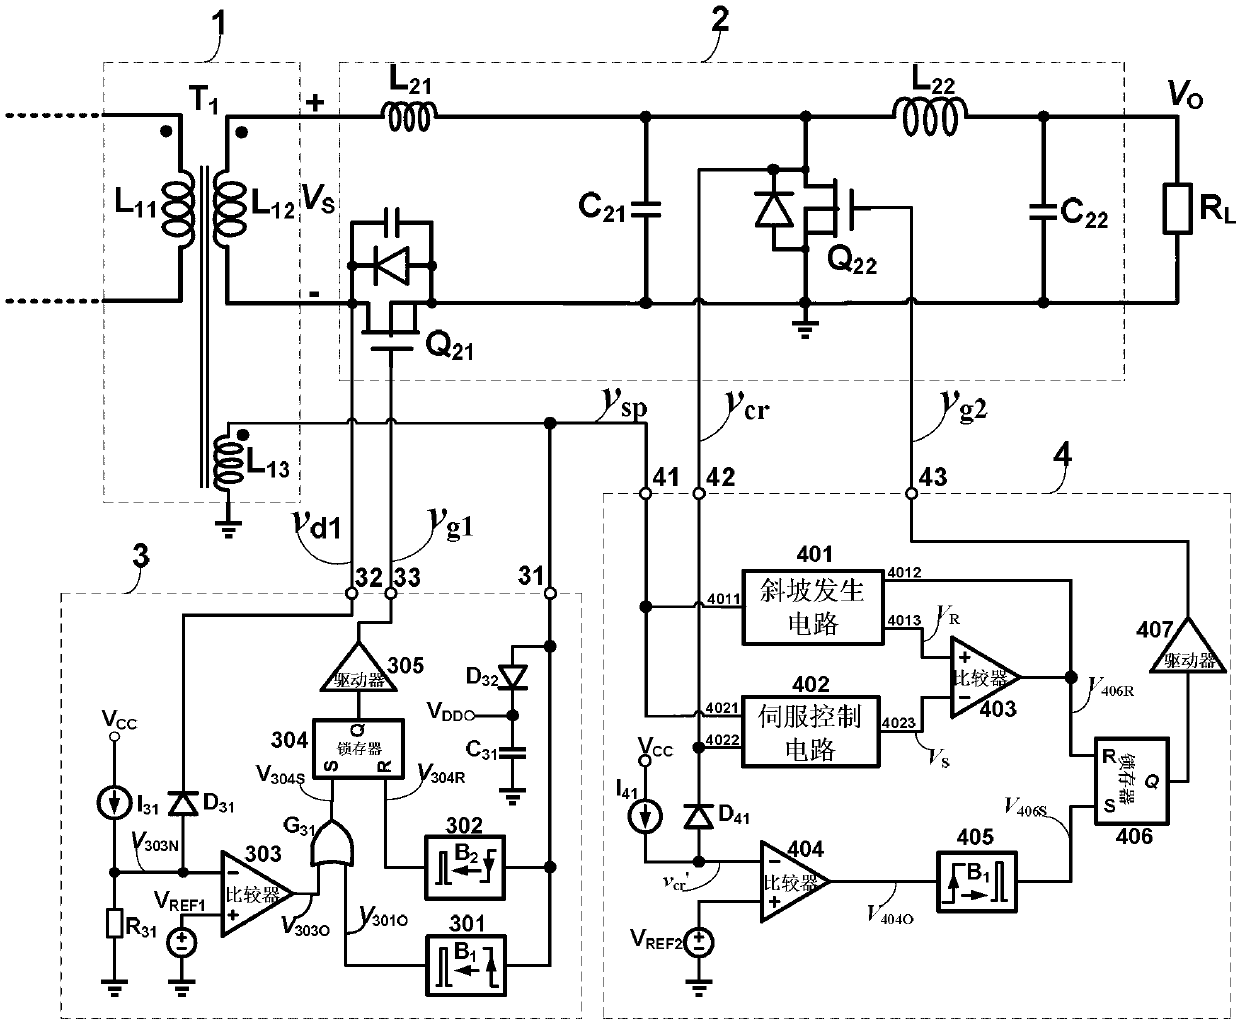 Quasi-resonance converter synchronous rectification circuit